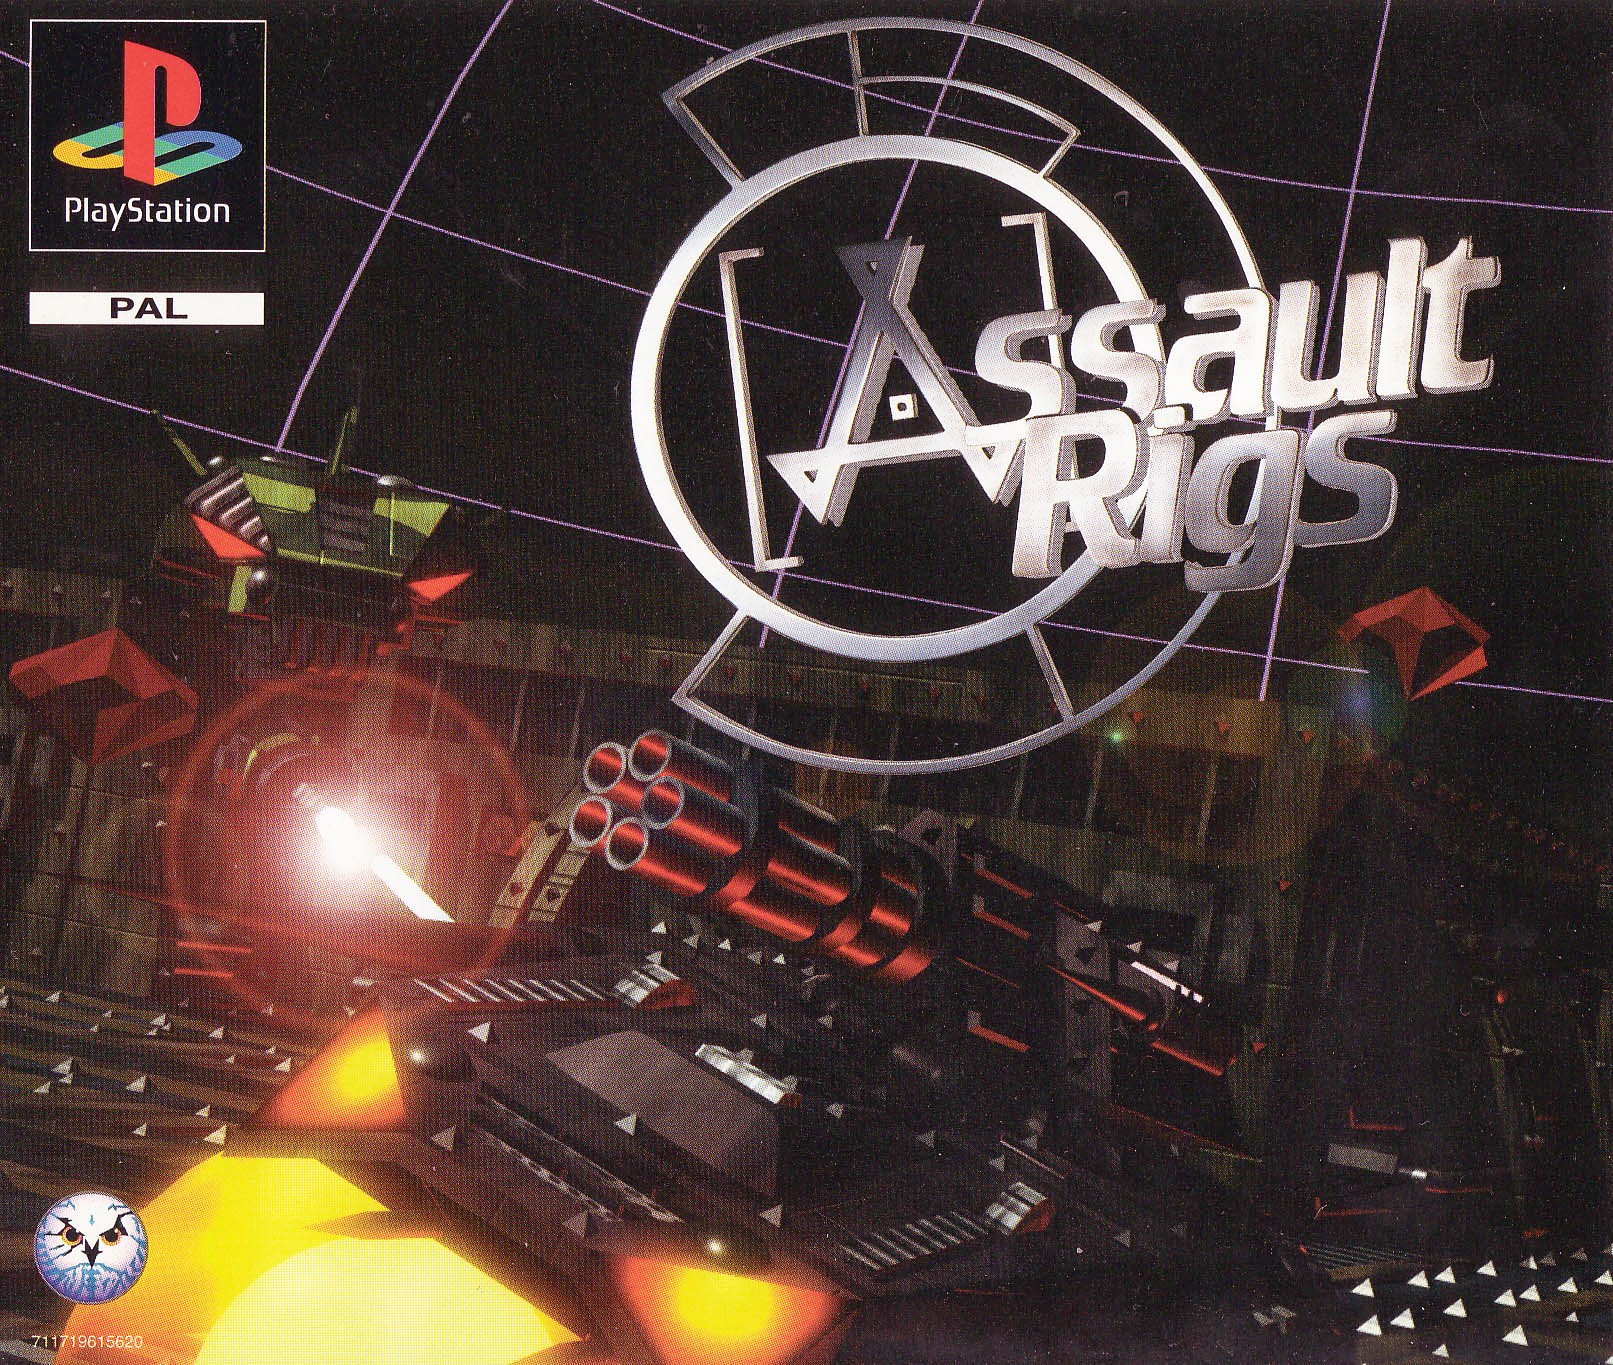 Assault Rigs PSX cover